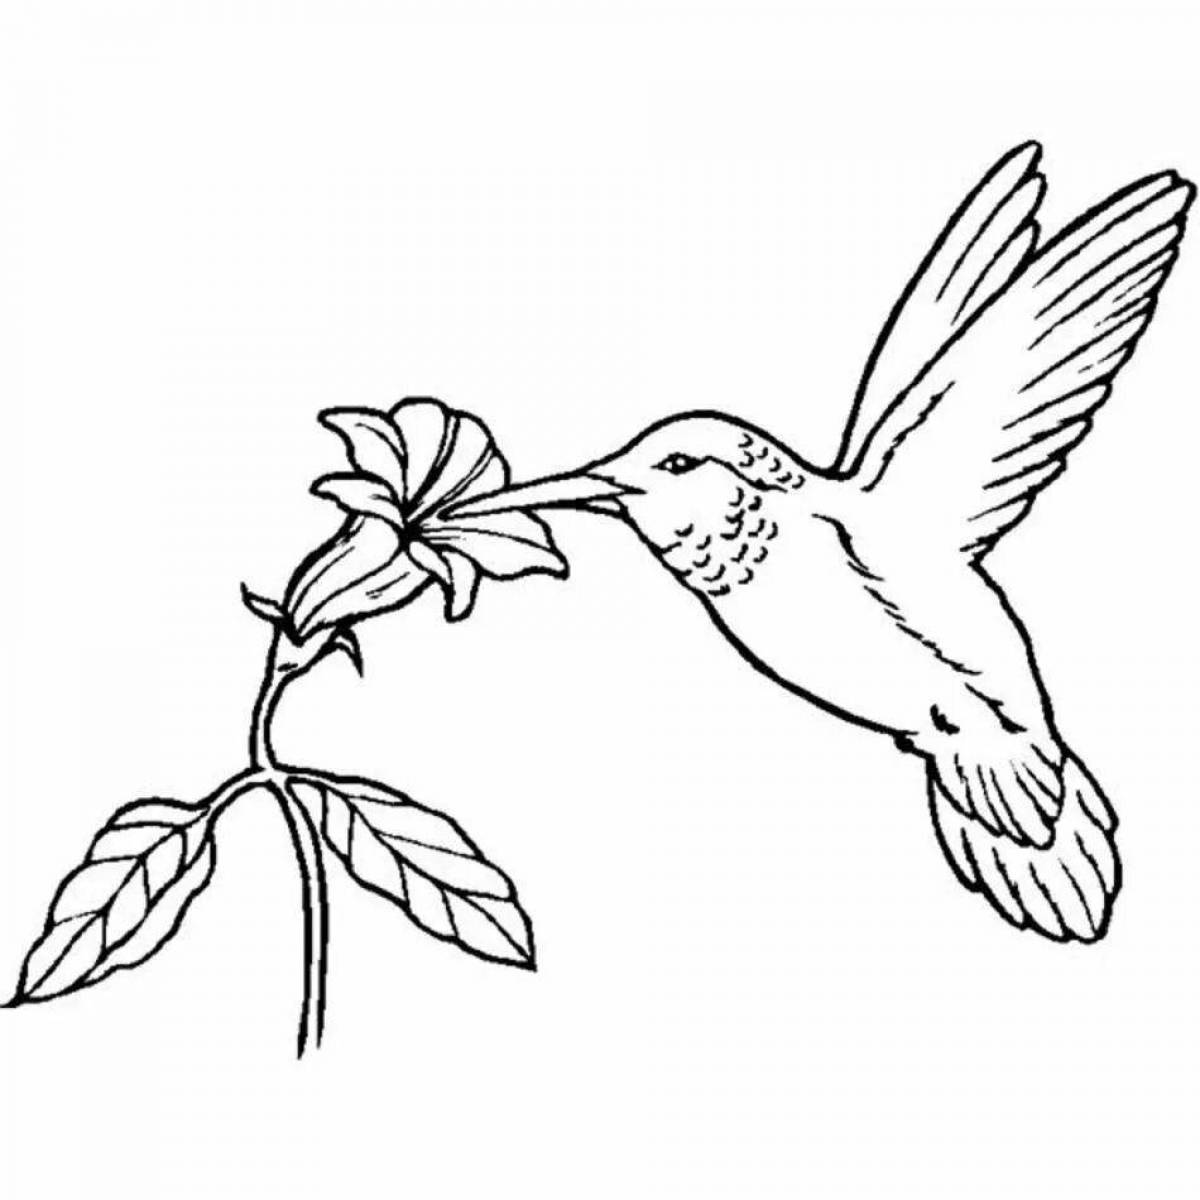 Peaceful coloring bird drawing